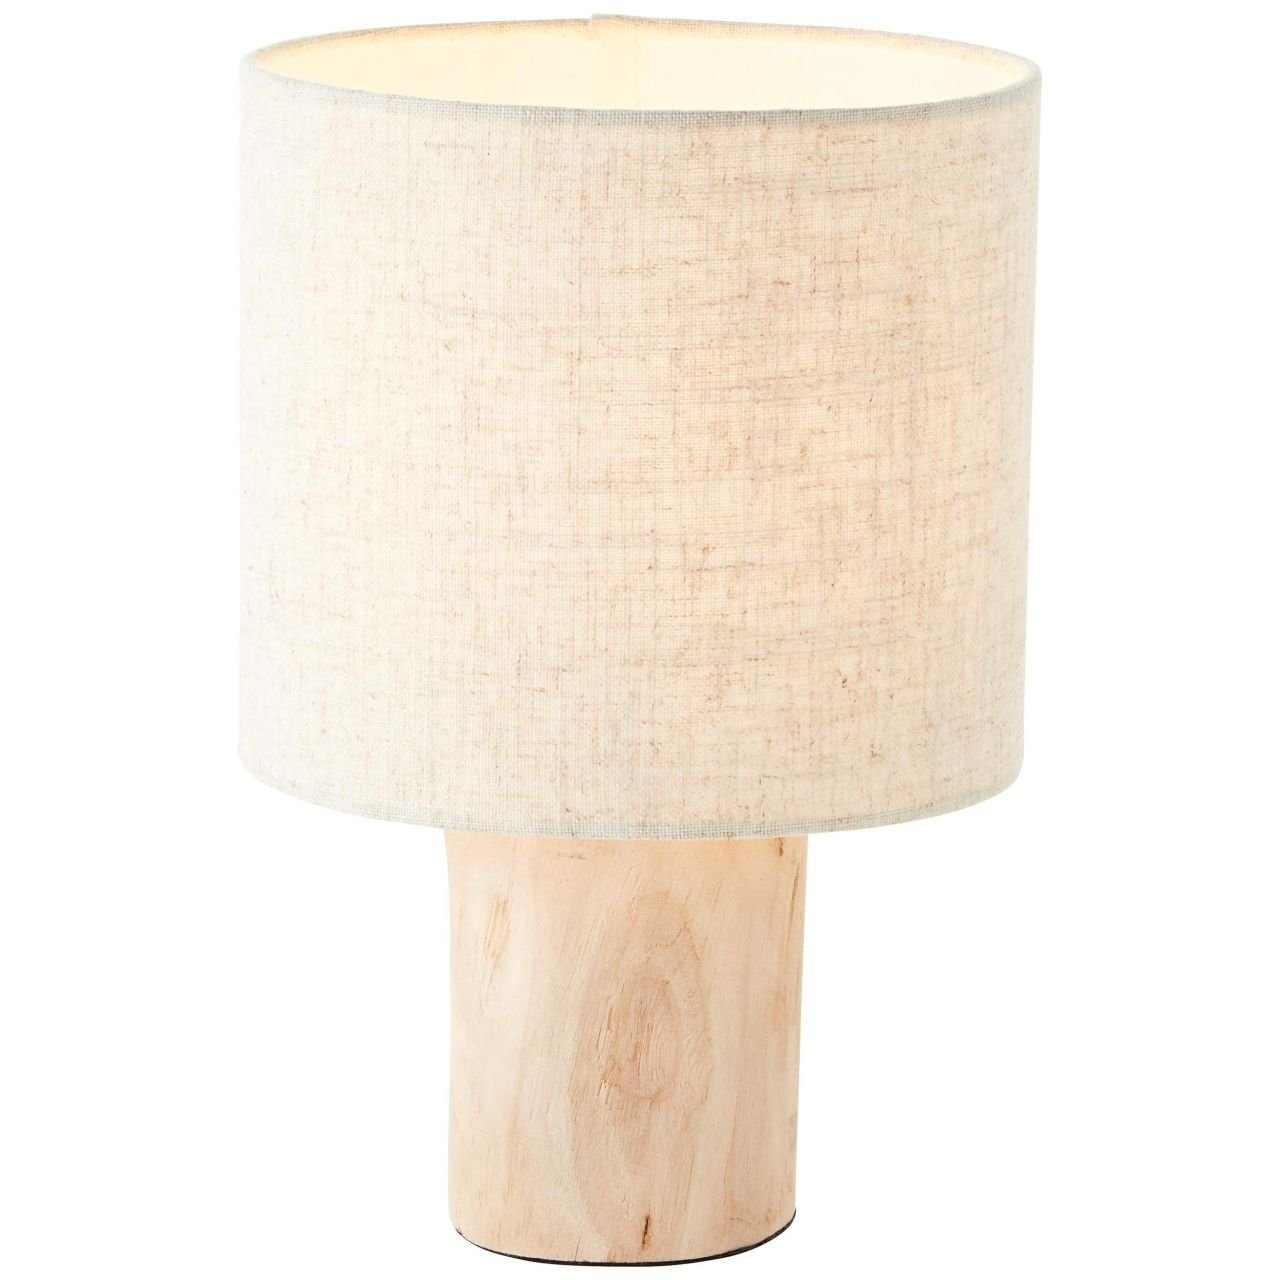 Brilliant Tischleuchte Pia, Lampe, Pia Tischleuchte natur, 1x A60, E27, 40W, Holz aus nachhaltiger